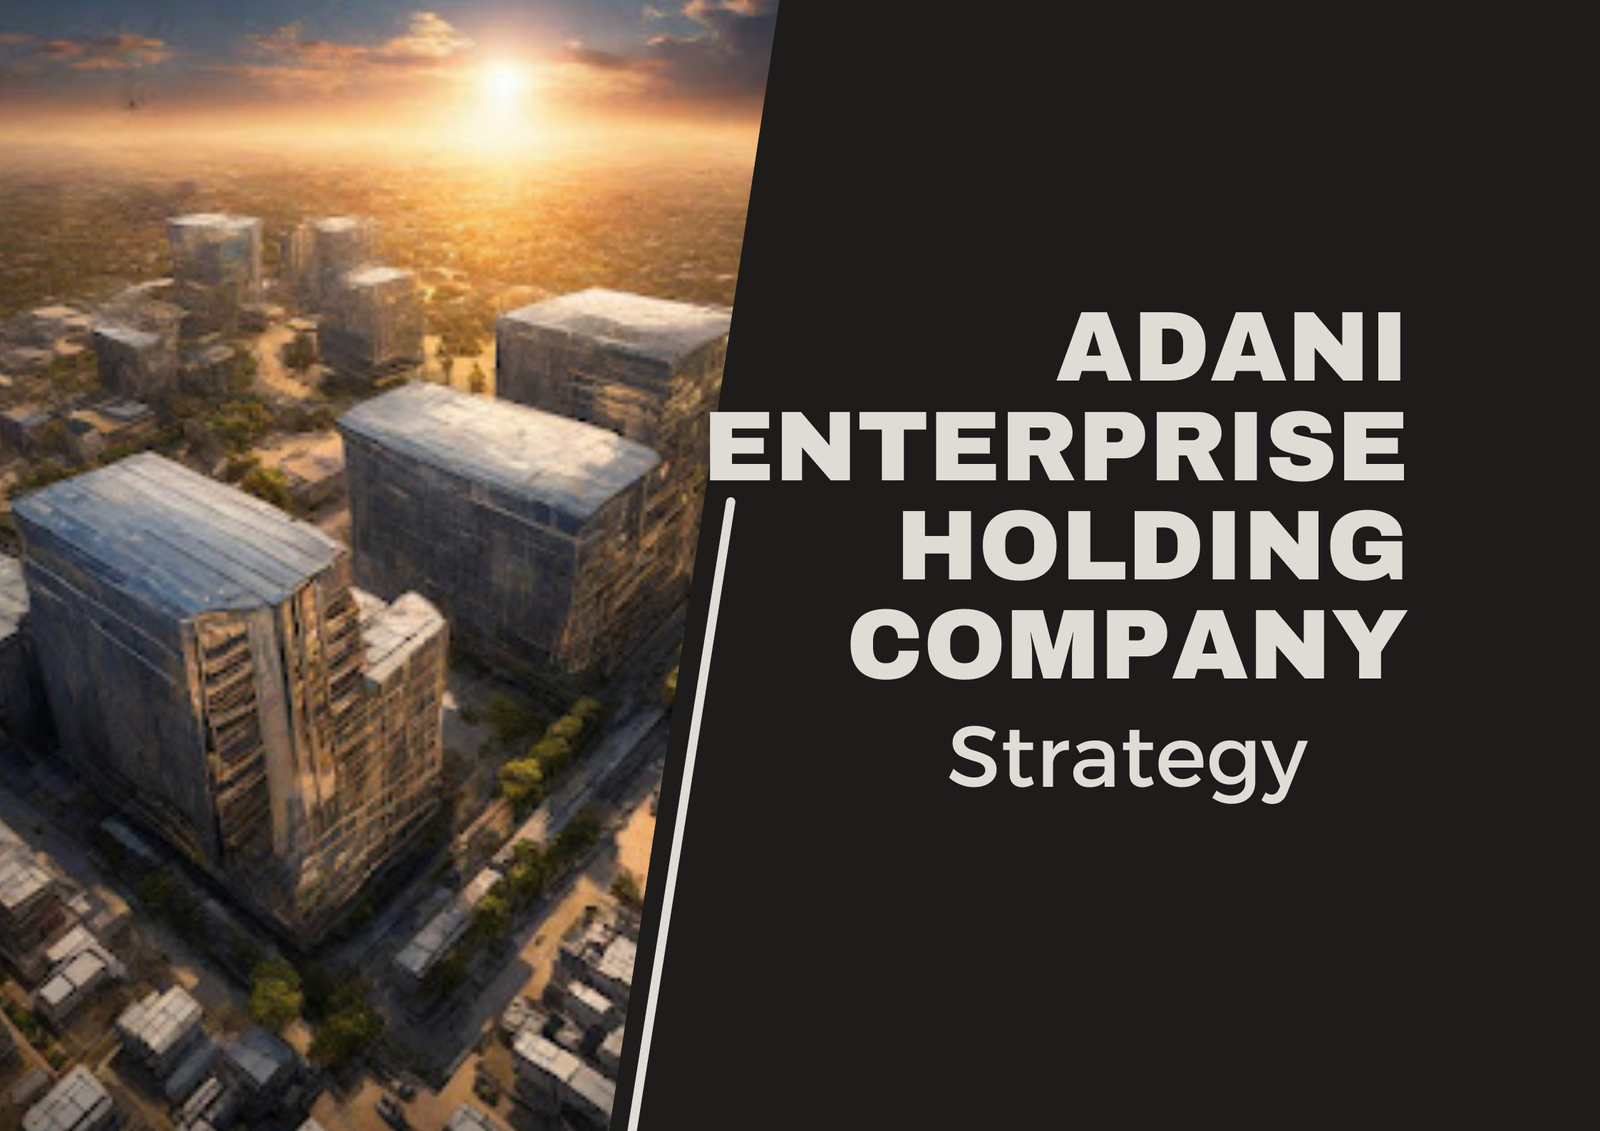 Market Strategy of Adani Enterprise Holding Company